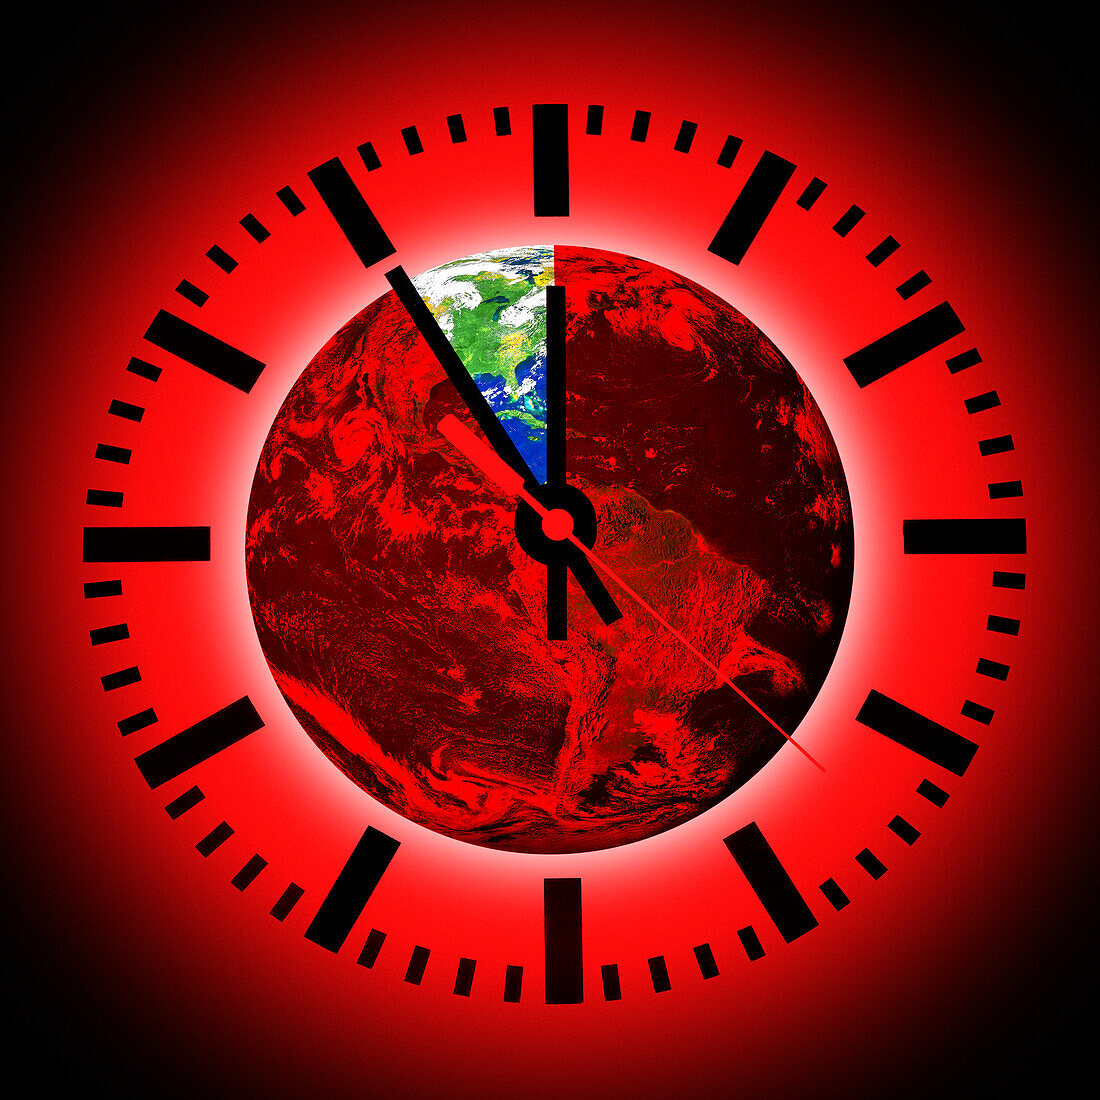 Doomsday Clock, conceptual composite image